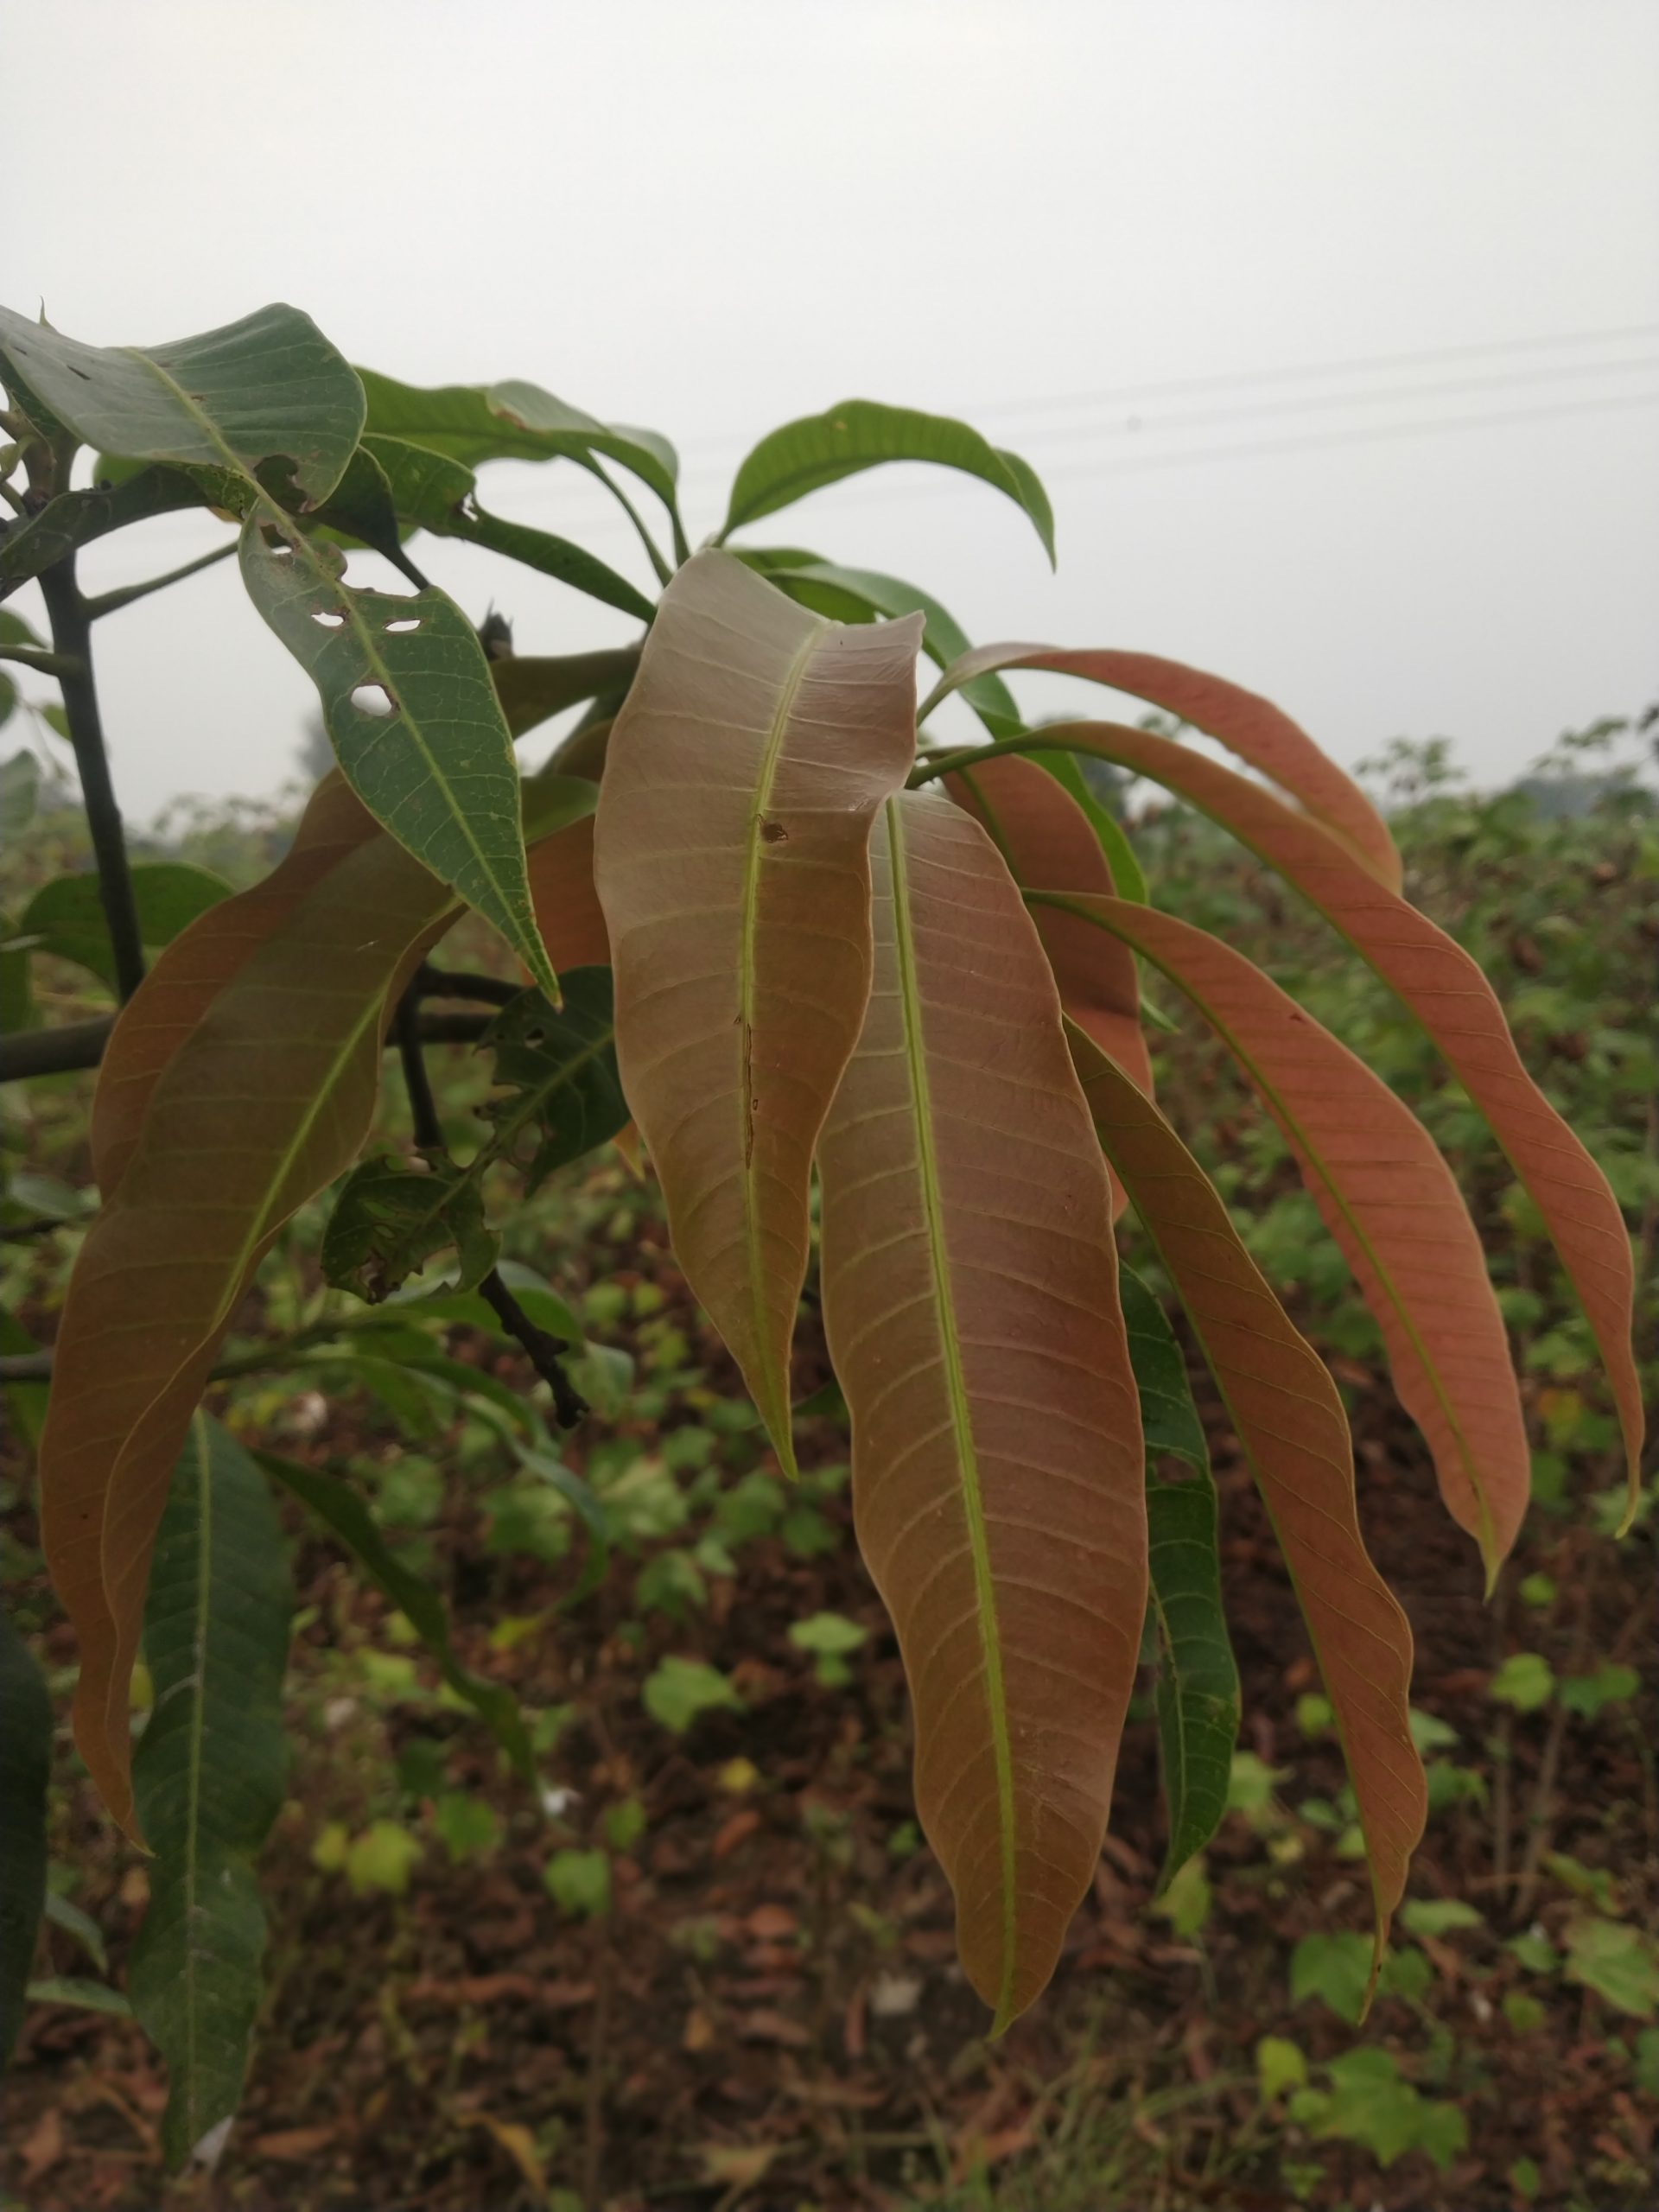 Mango plant